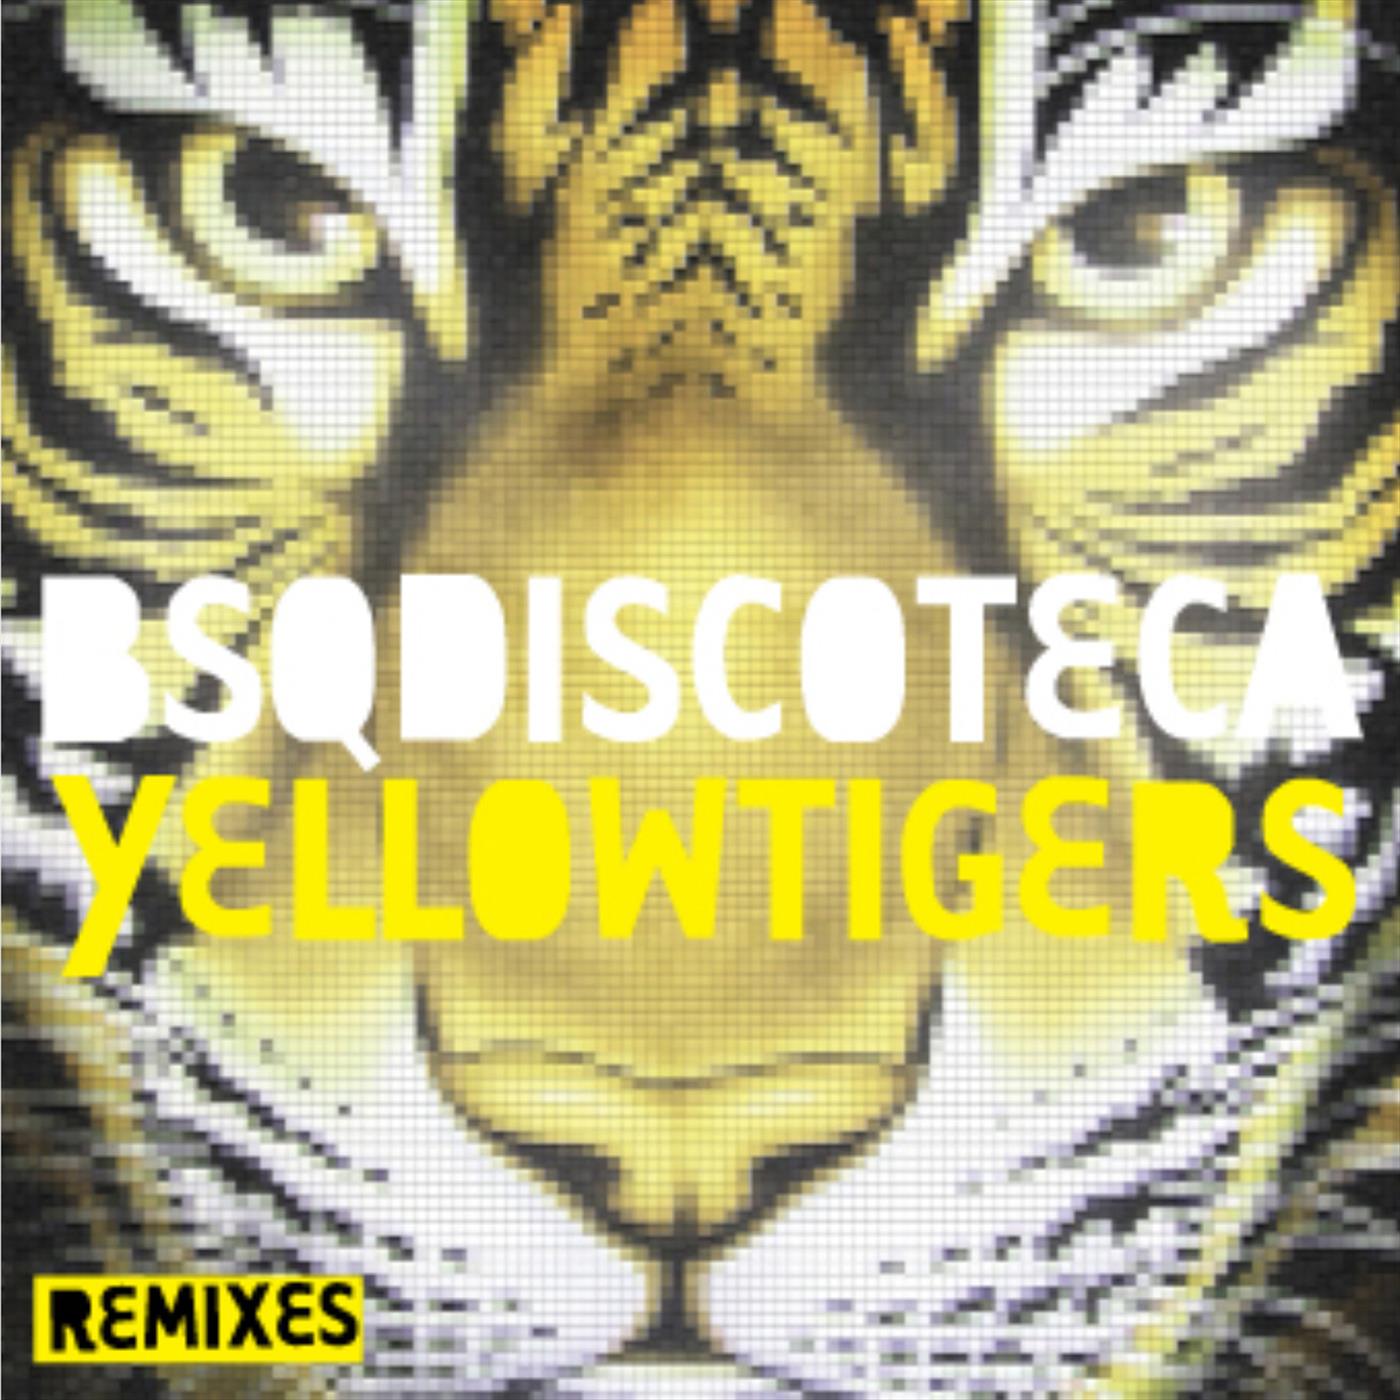 Yellow Tigers - remixes